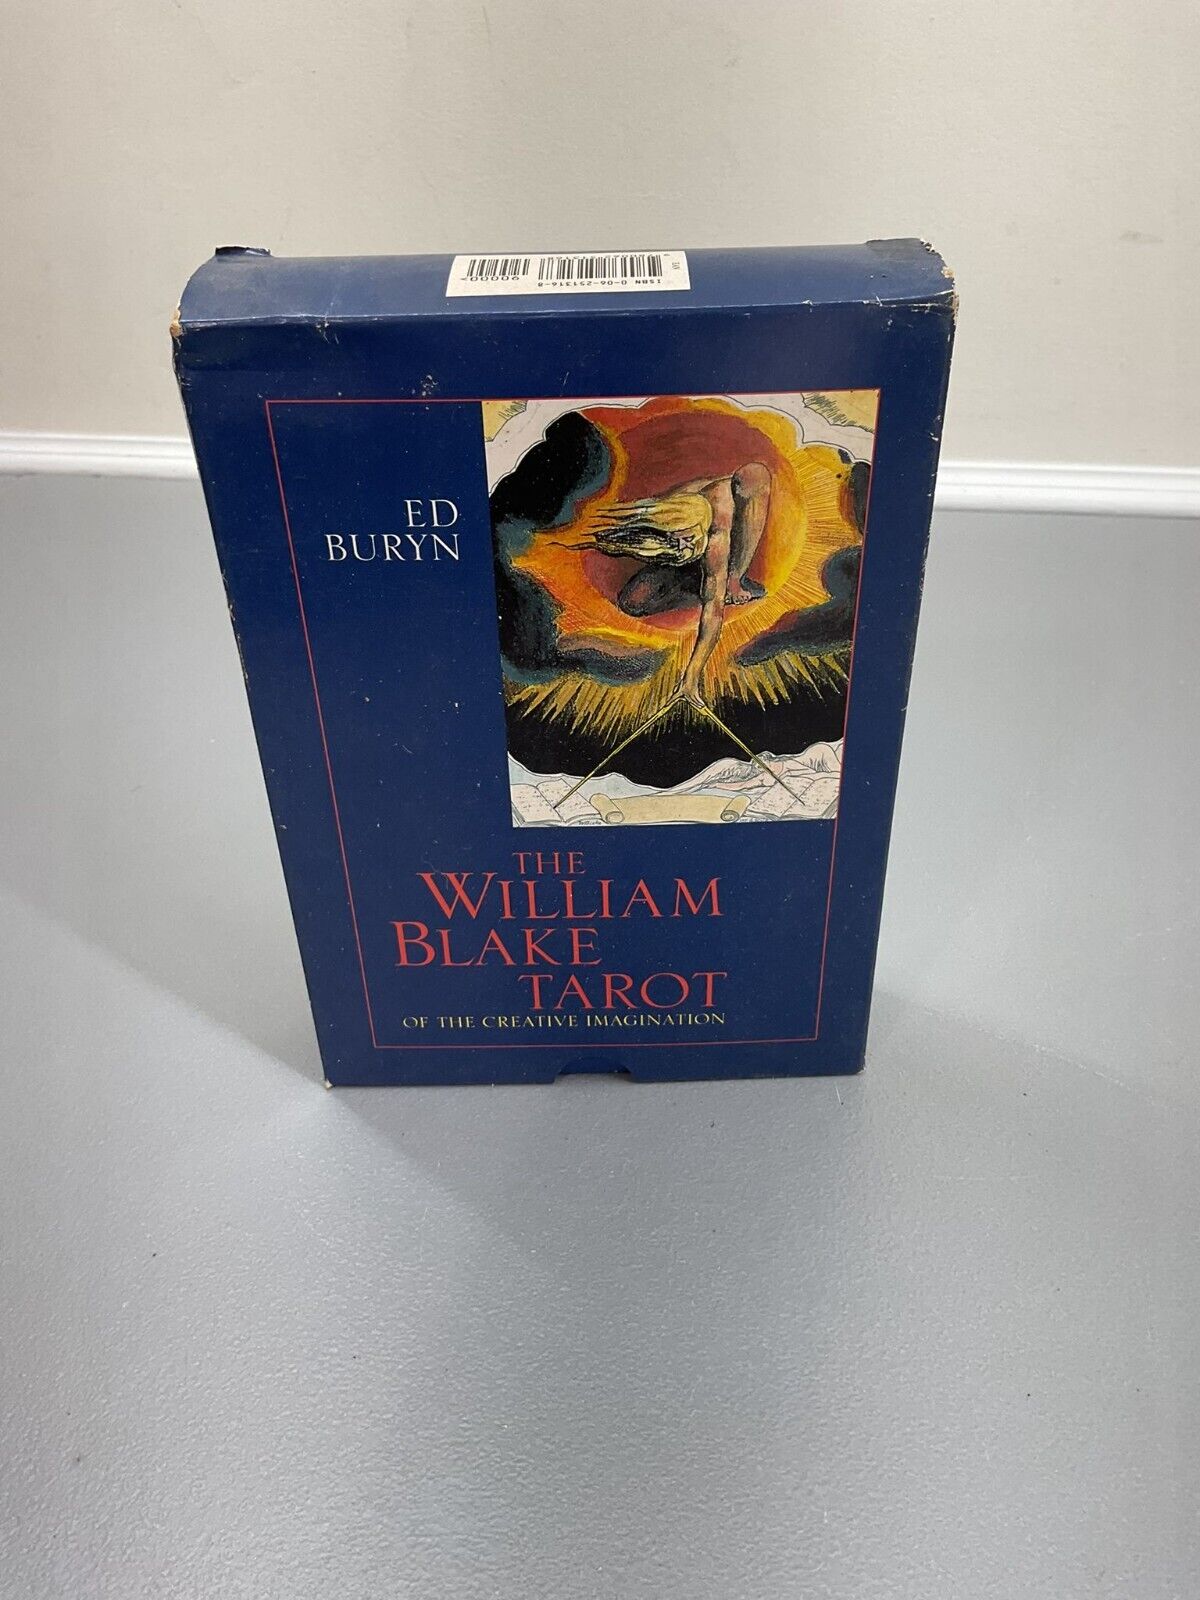 William Blake (Of the Creative Imagination) Collection Tarot - Ed Buryn